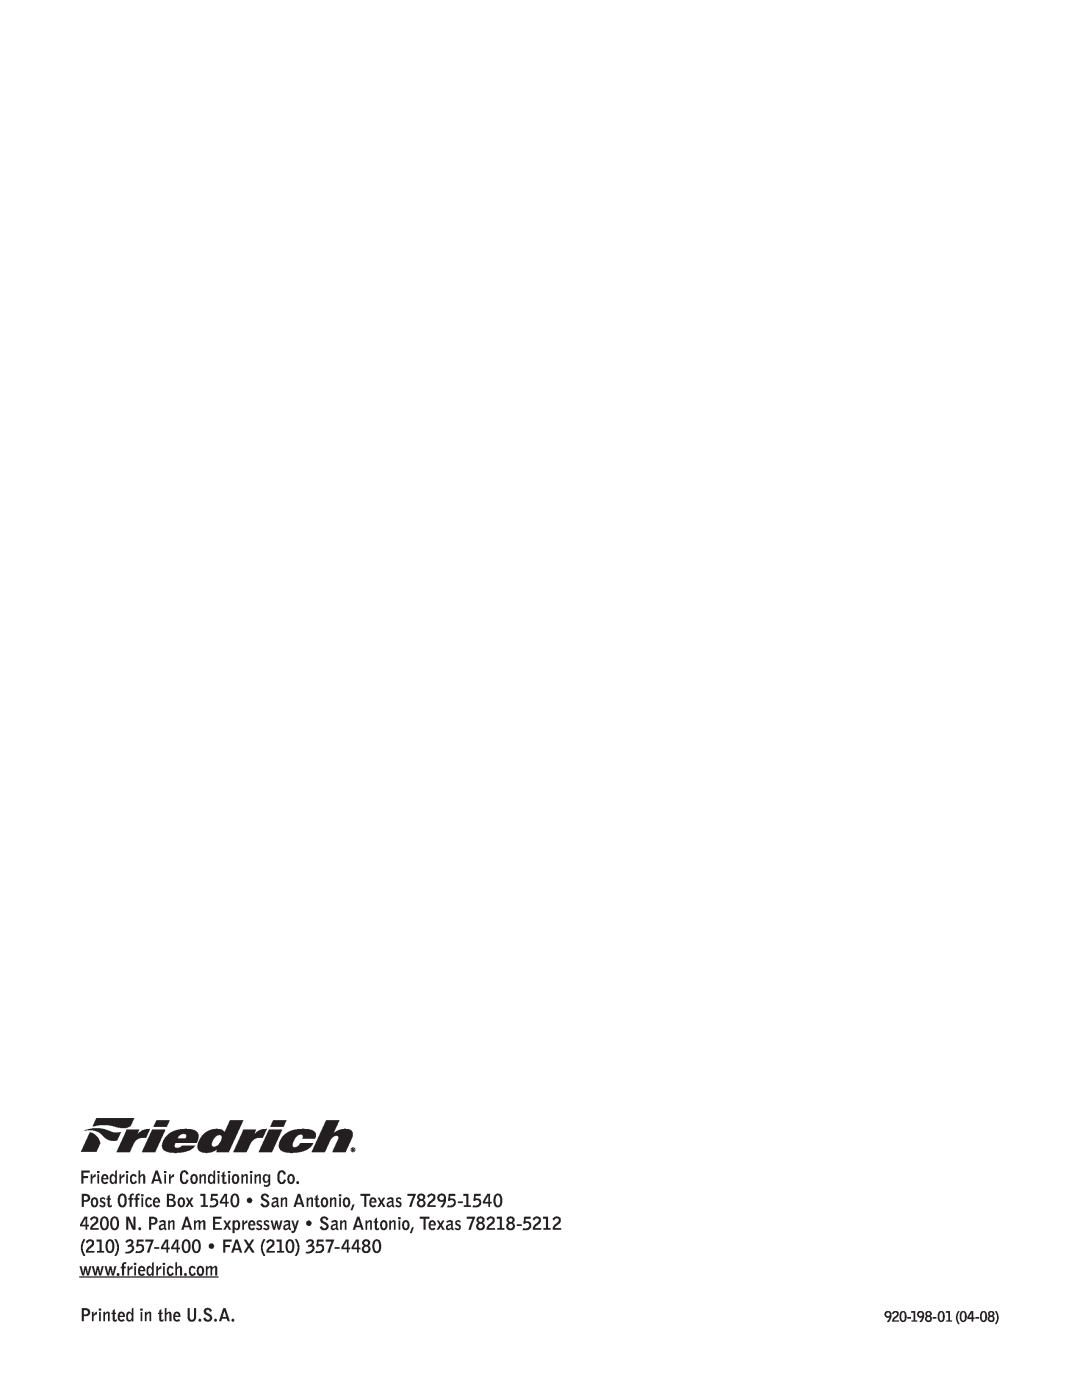 Friedrich YS09 operation manual Friedrich Air Conditioning Co, Post Office Box 1540 San Antonio, Texas, 920-198-01 